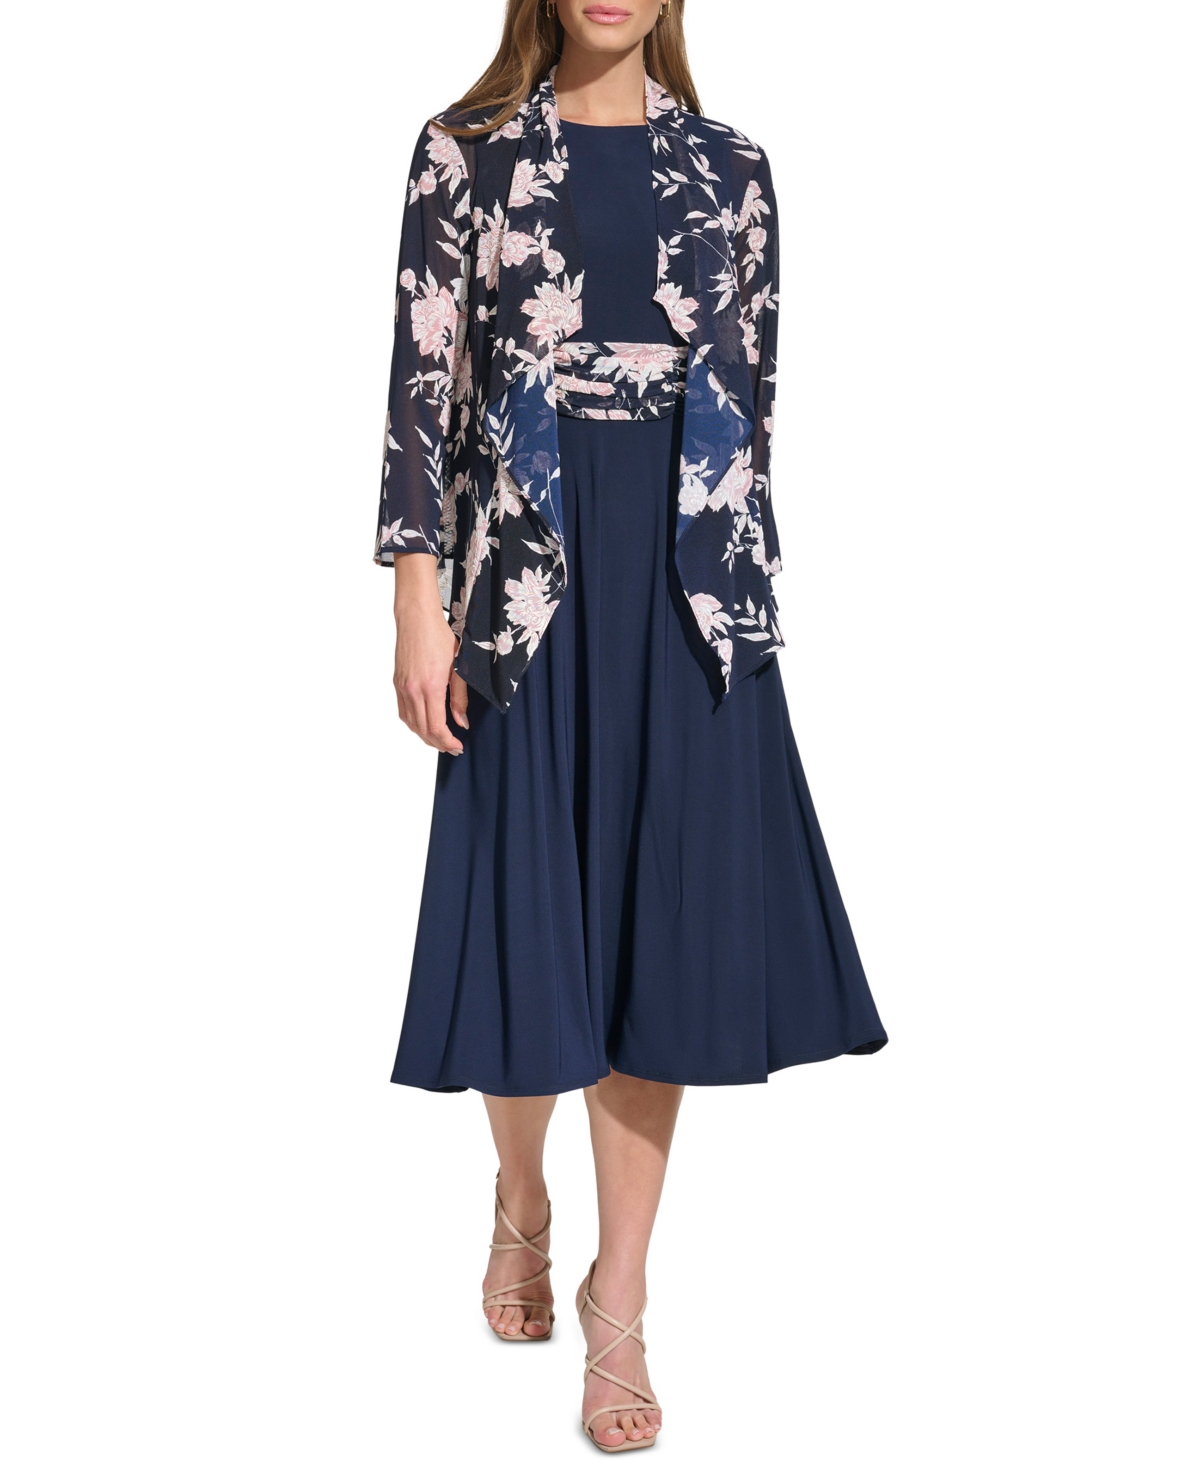 Women's 2-Pc. Floral-Print Jacket & Dress Set - Navy Pansy